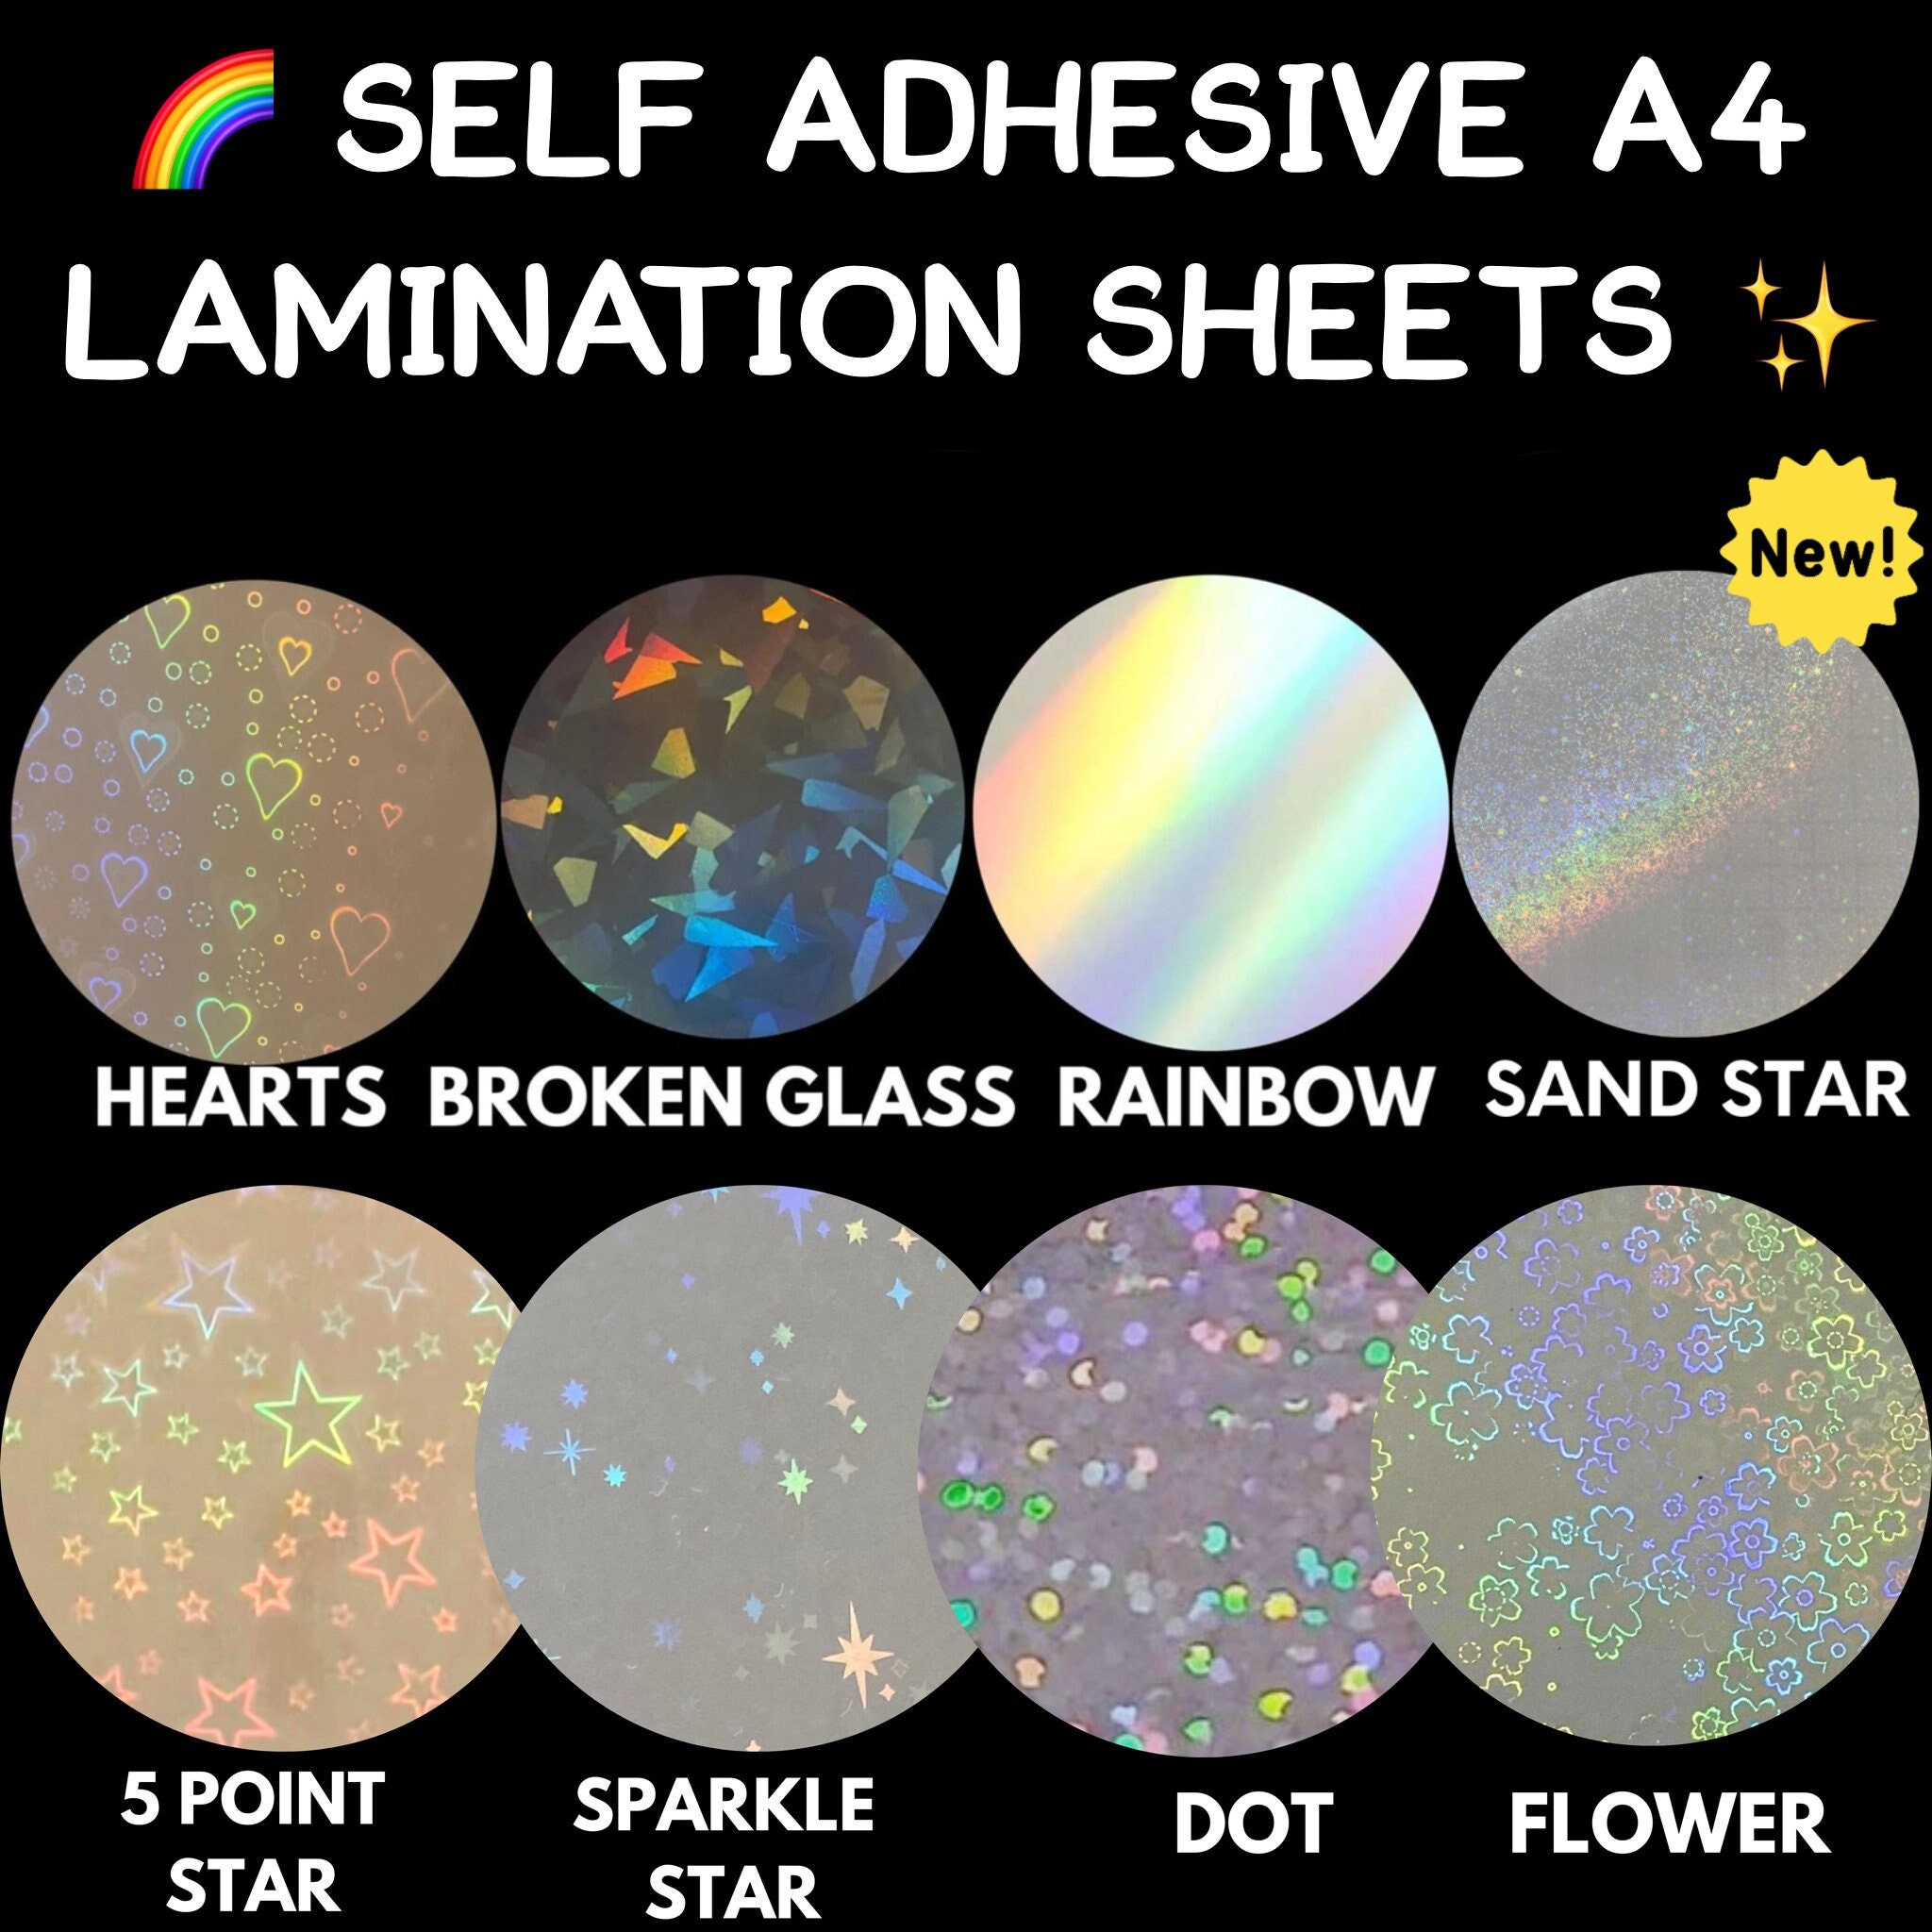 Buy Bubbles Transparent Holographic Laminating / Toner Fusing Foil